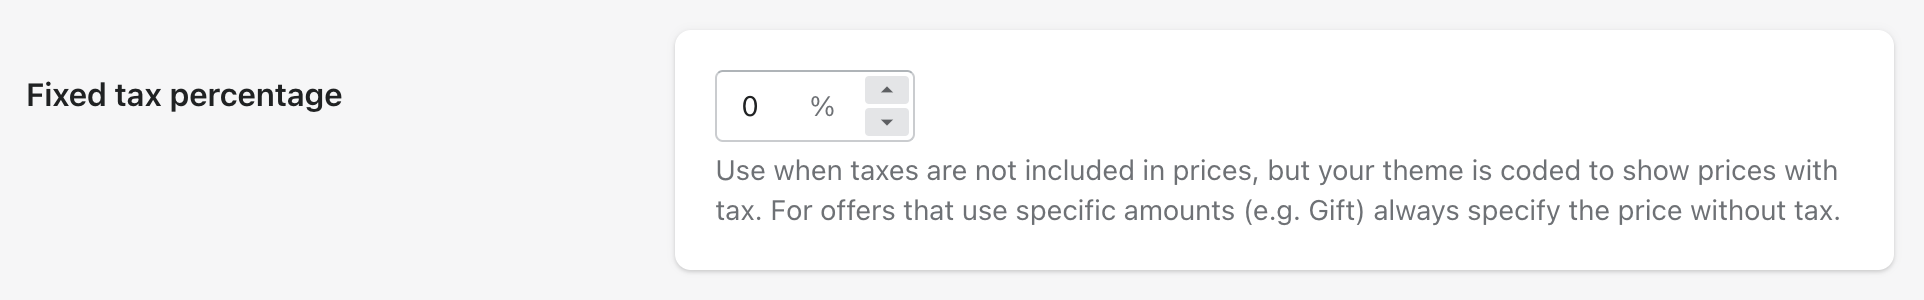 Fixed_tax_percentage.png